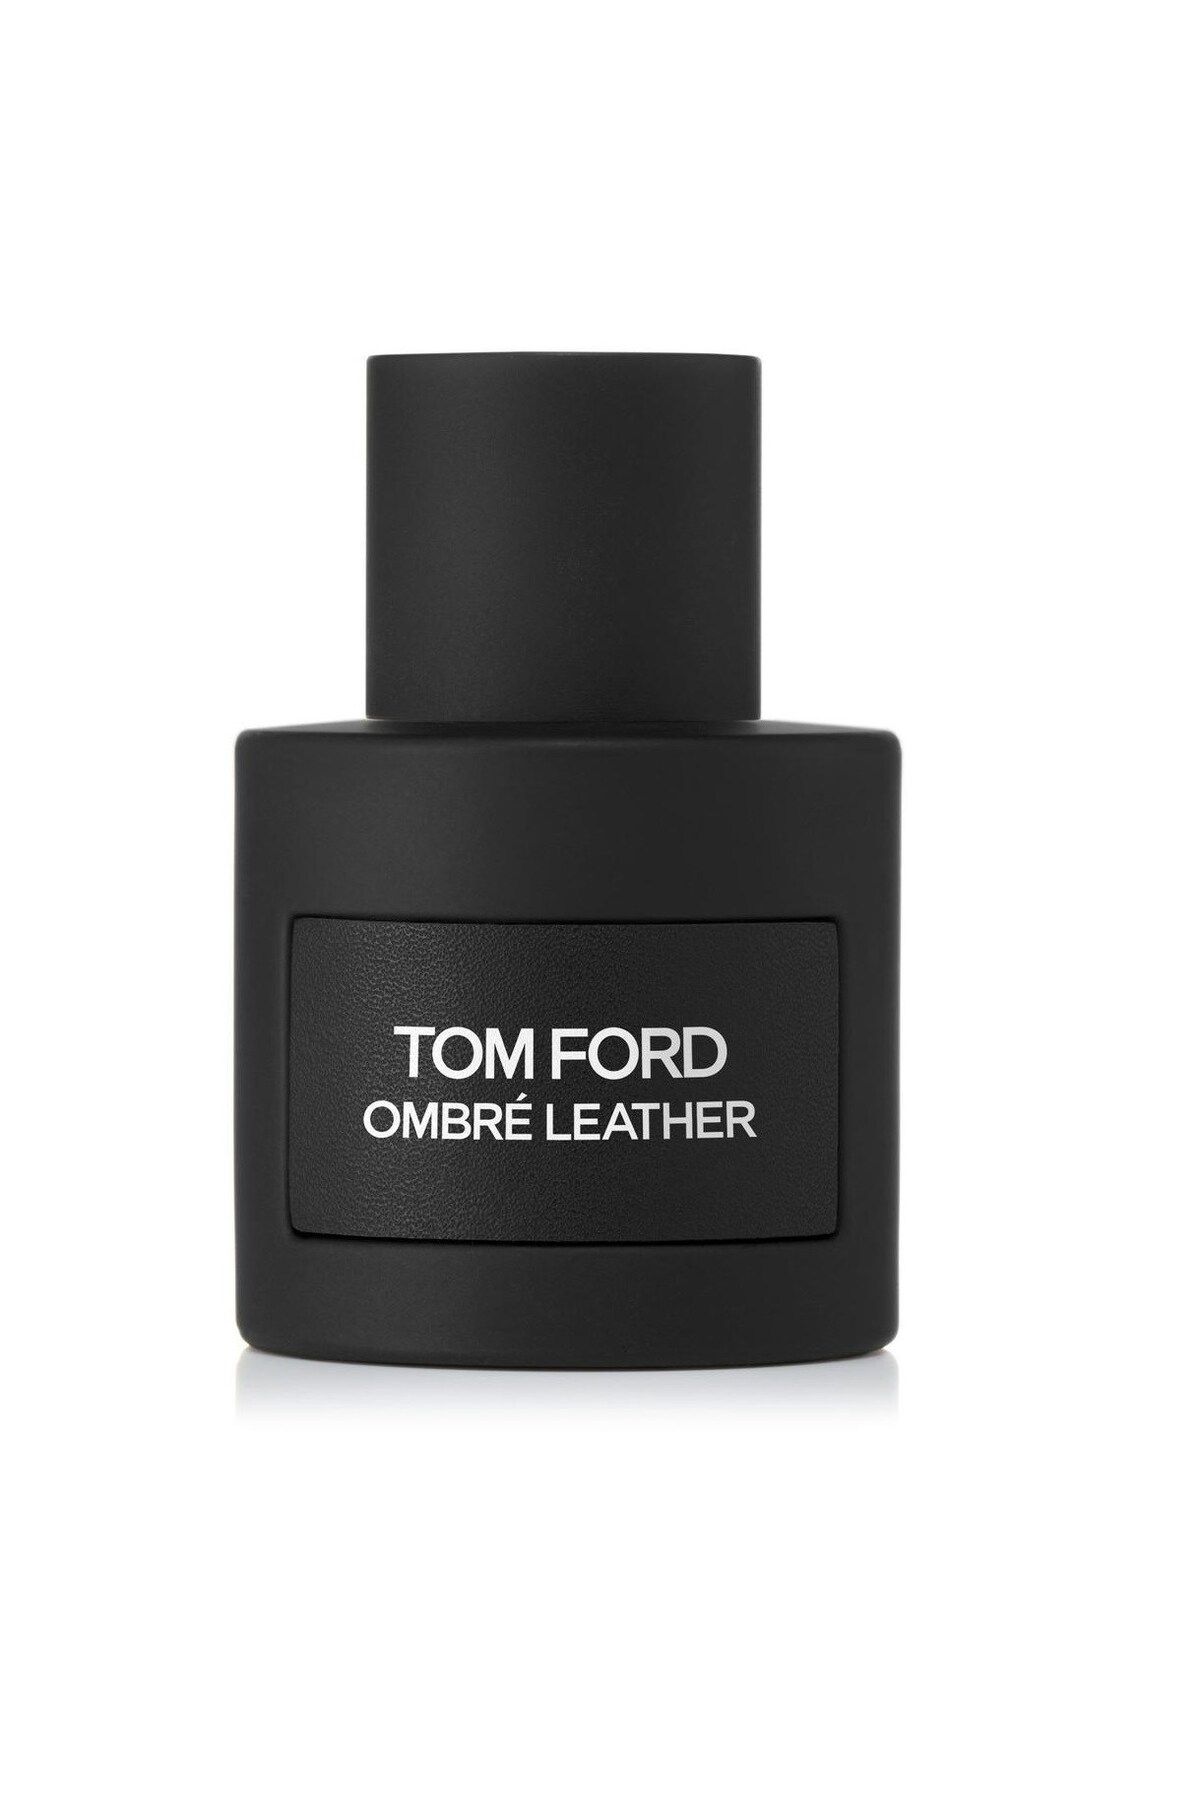 Tom Ford Ombre Leather Eau De Parfum – Çiçeksi Odunsu Unisex Parfüm 50 Ml